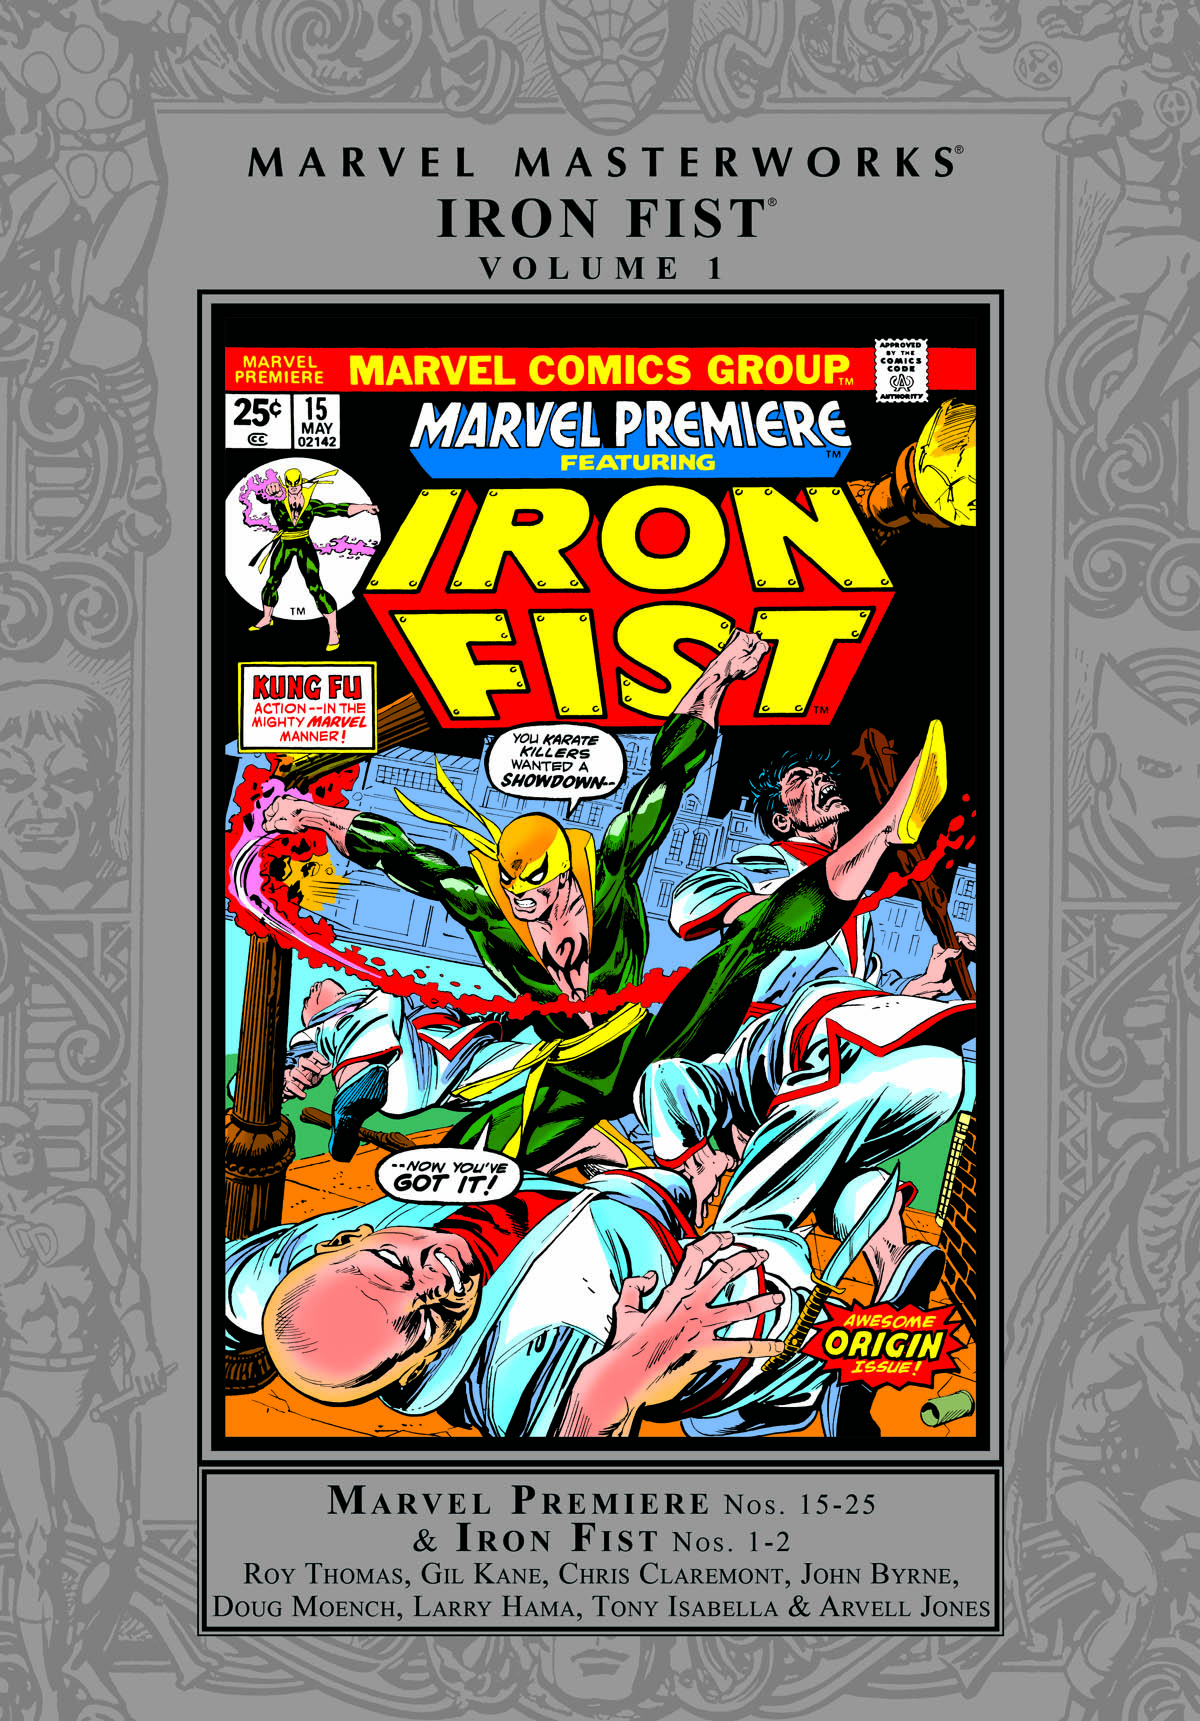 Marvel Masterworks: Iron Fist (Hardcover)